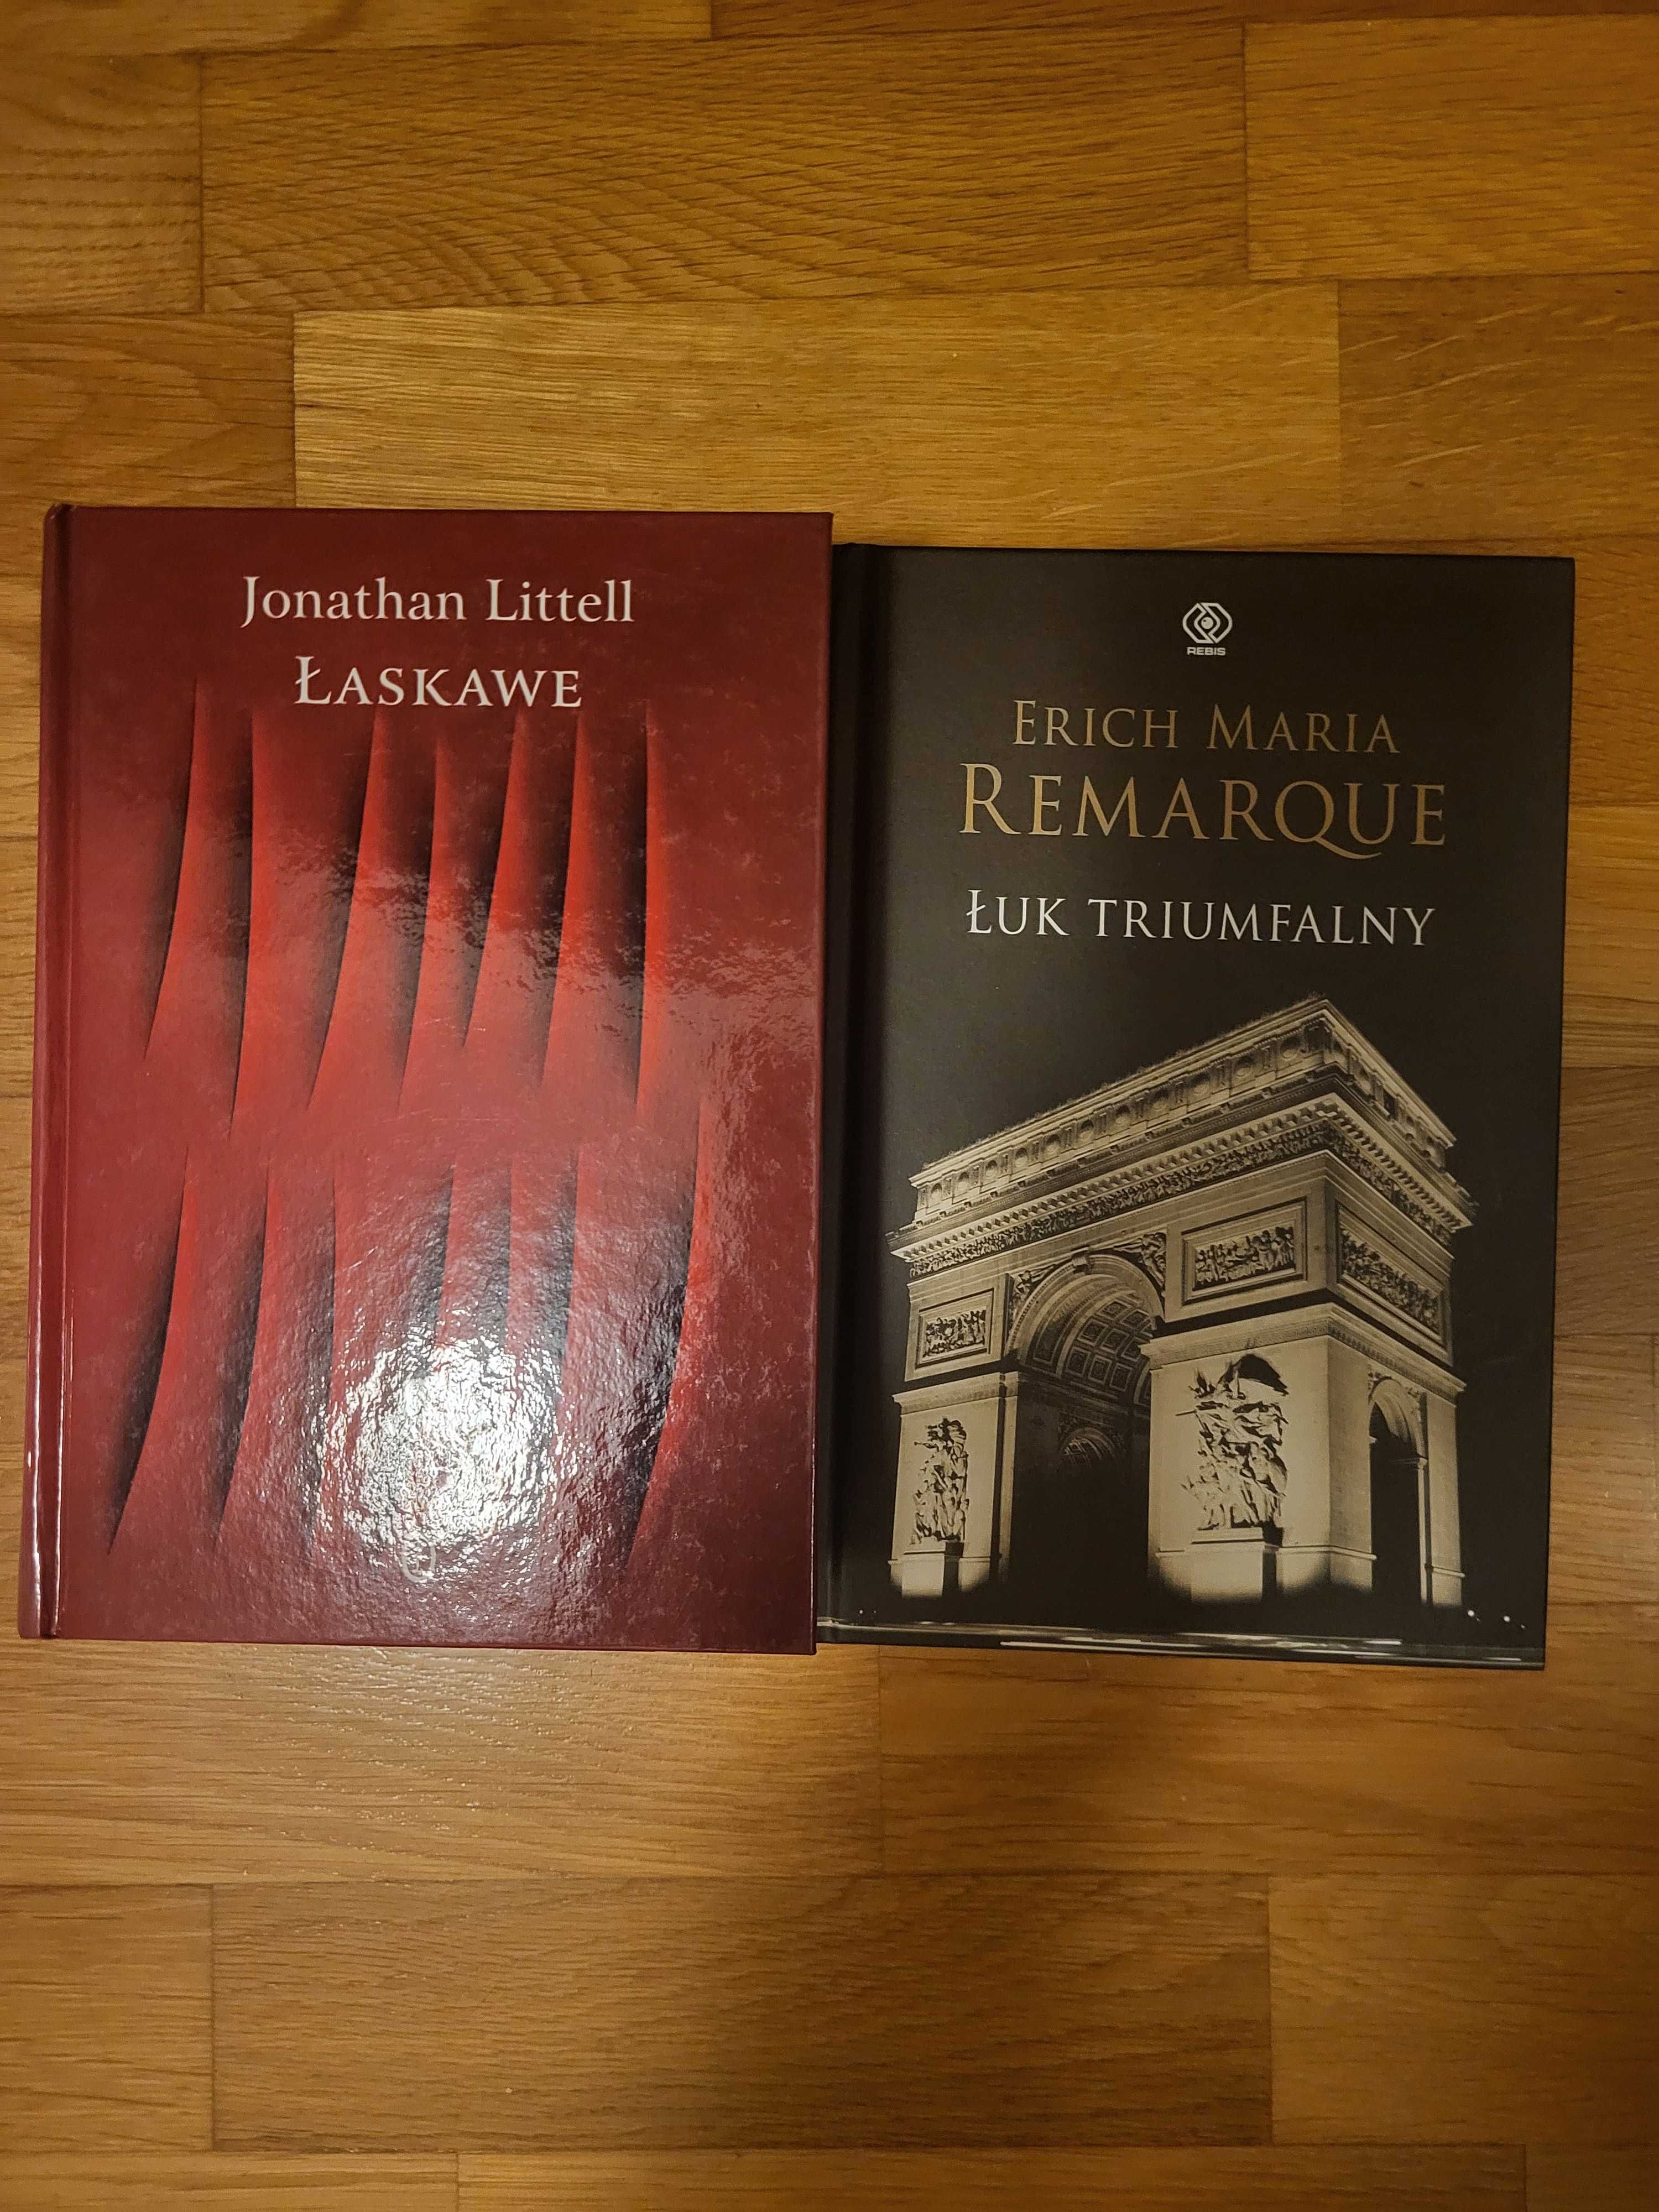 Książki używane, Littell, Remarque